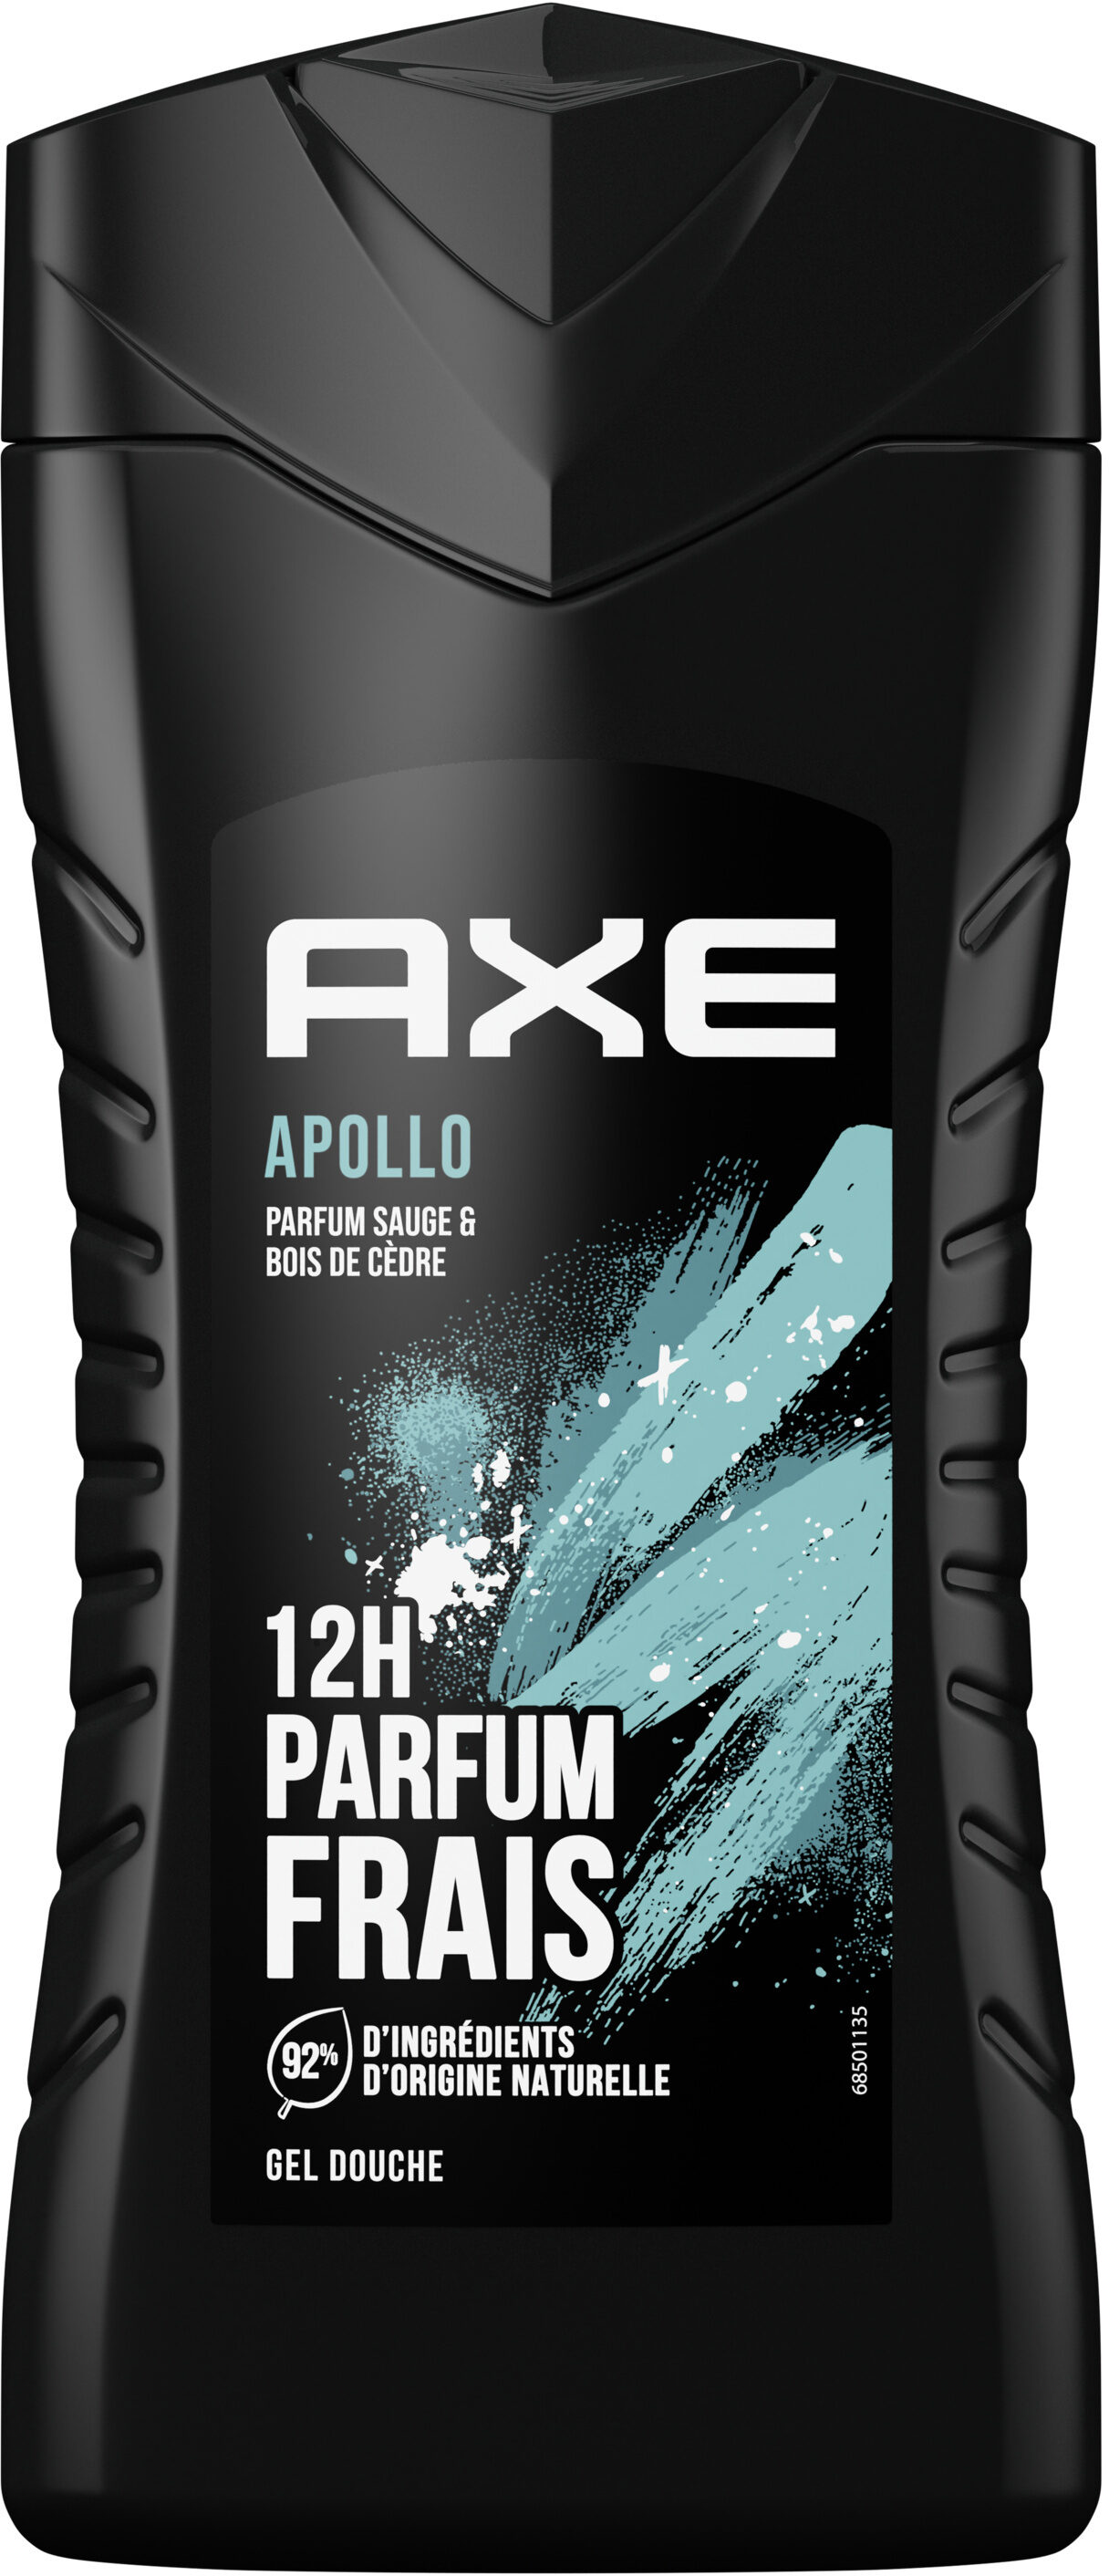 AXE Gel Douche Homme Apollo 12h Parfum Frais - Product - fr